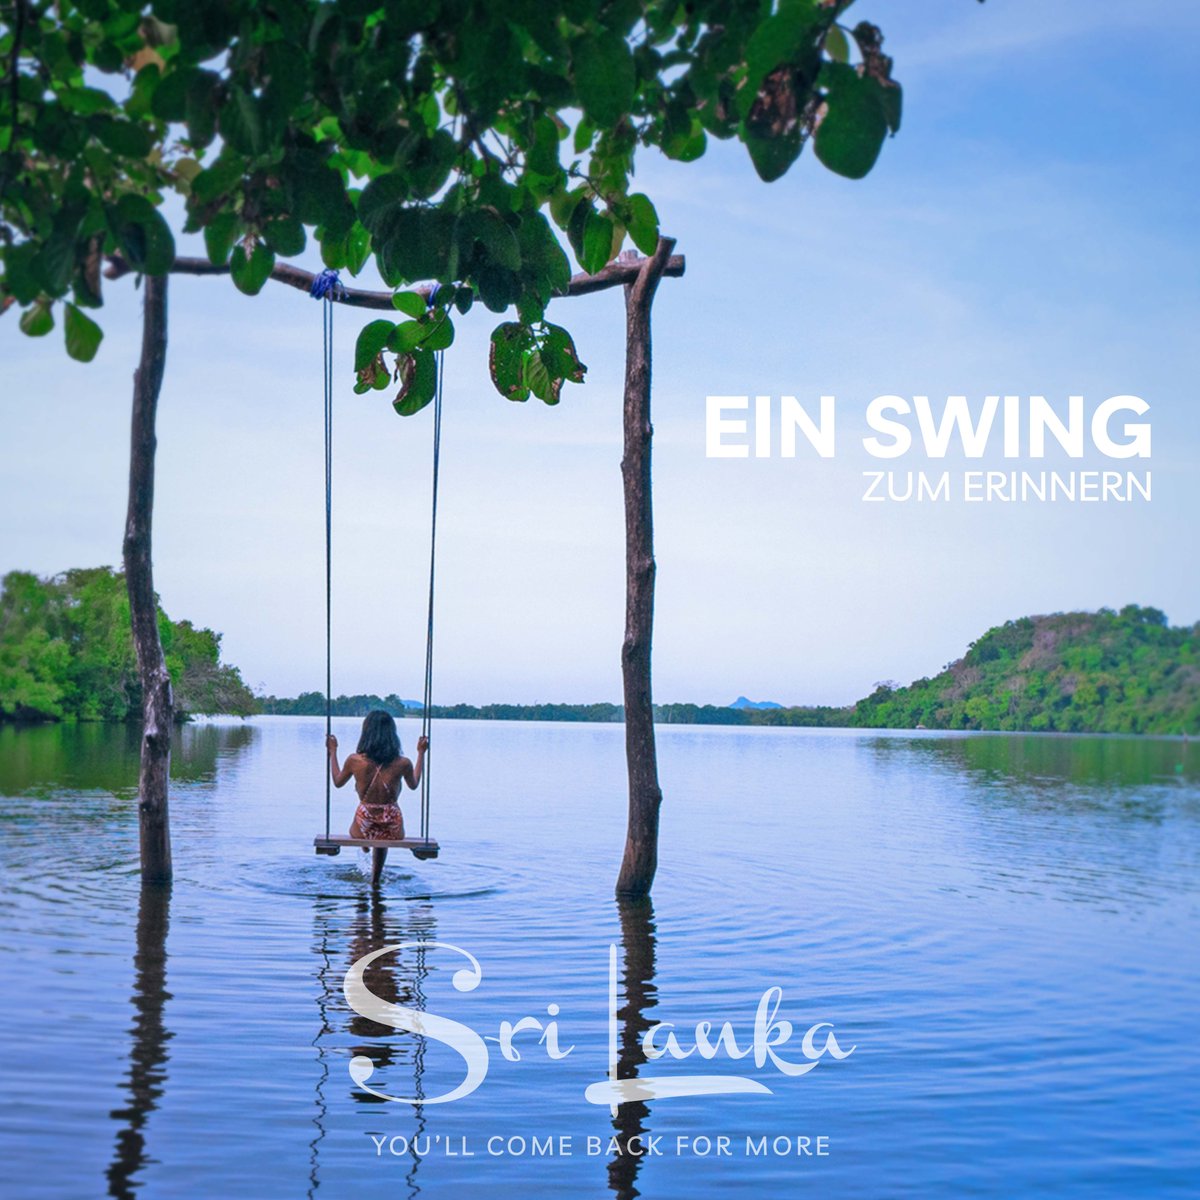 A swing to remember #ExploreSriLanka #VisitSriLanka #YouWillComeBackForMore #SriLanka #GermanTourist